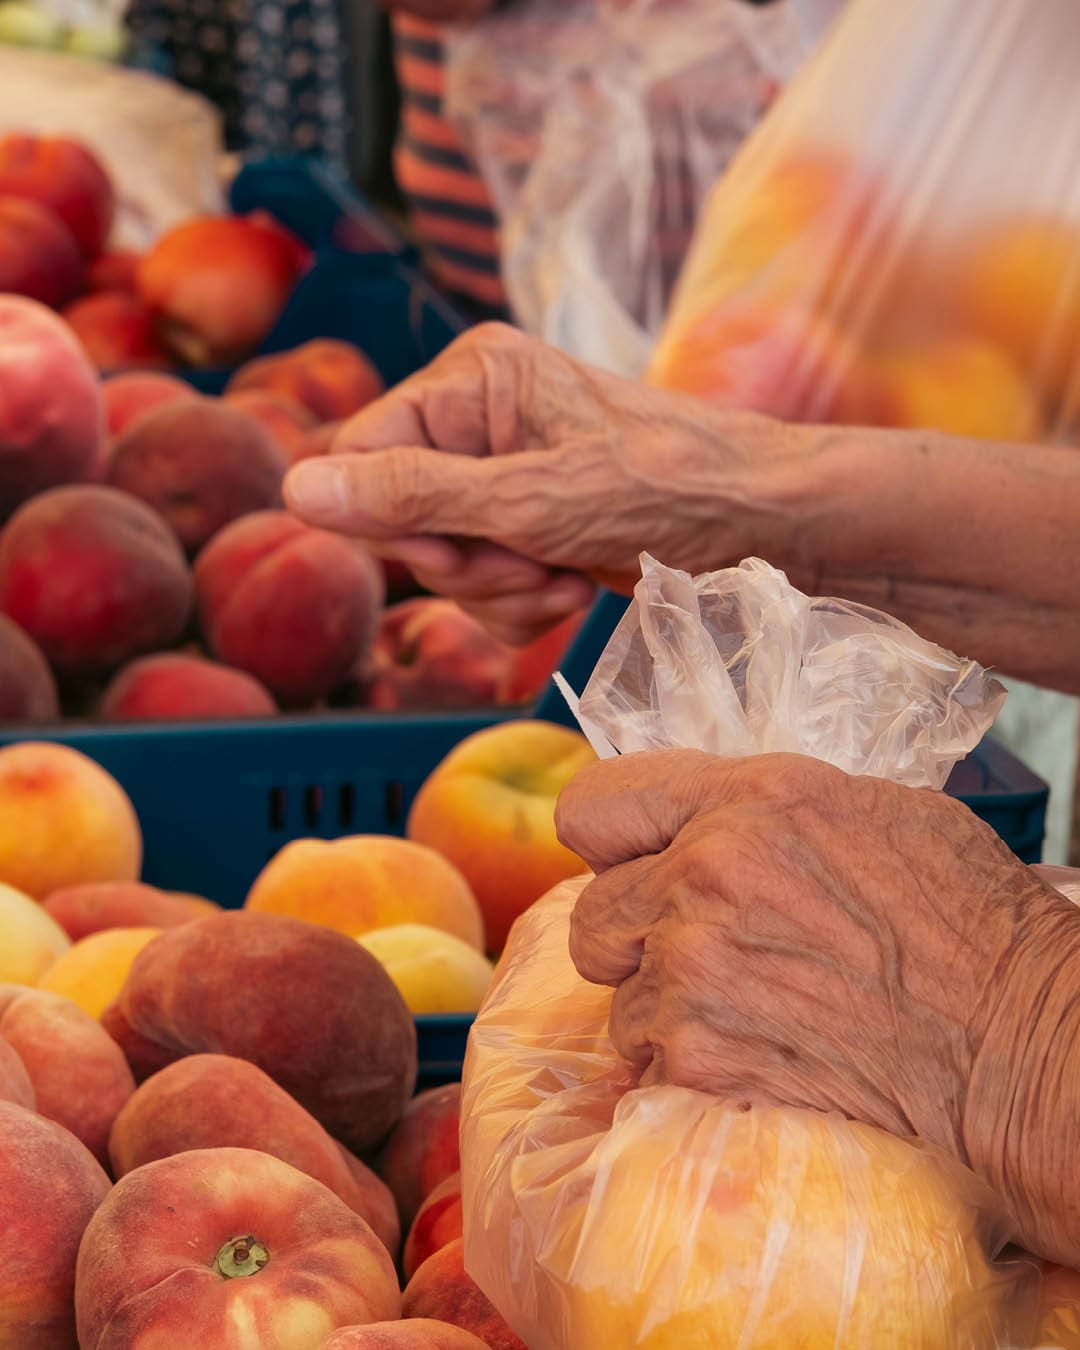 Elderly lady buys fresh peaches in a market